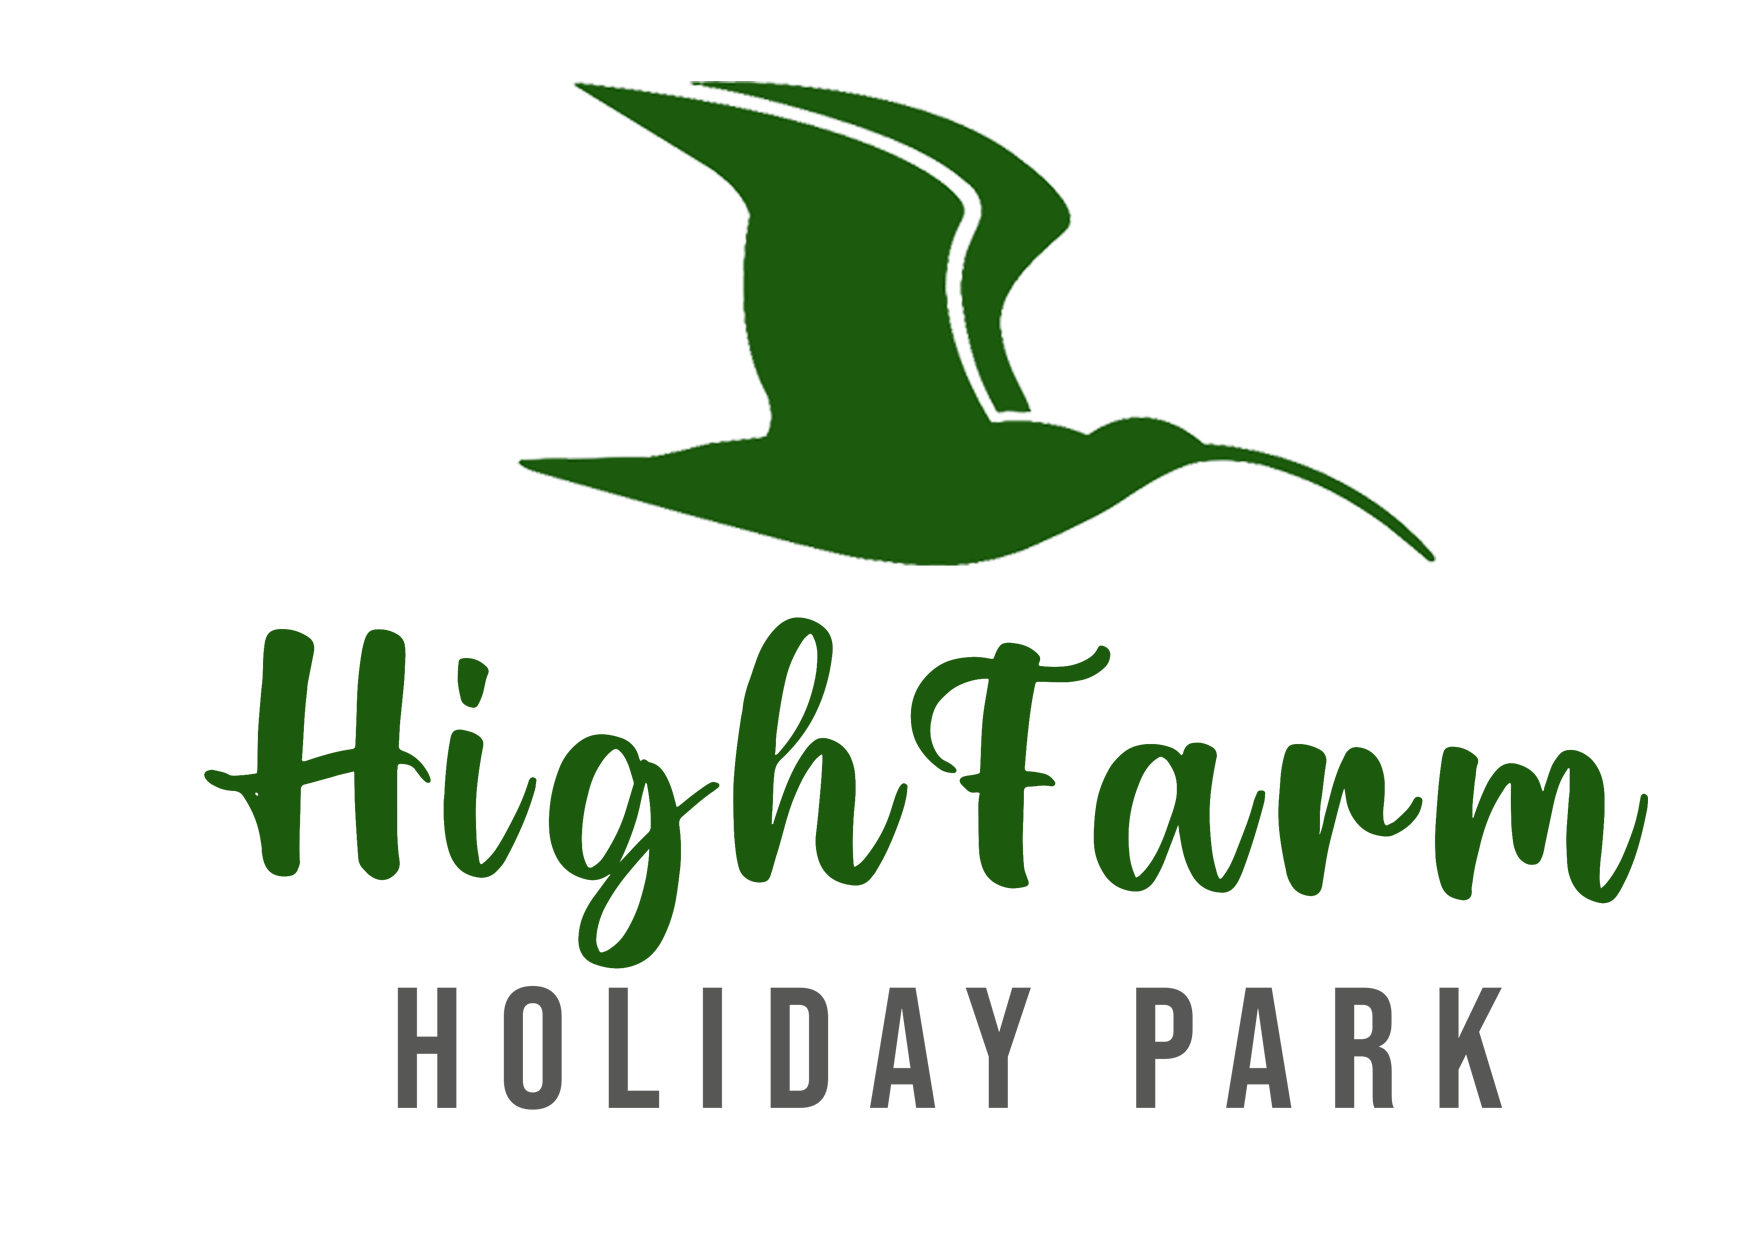 www.highfarmholidaypark.uk